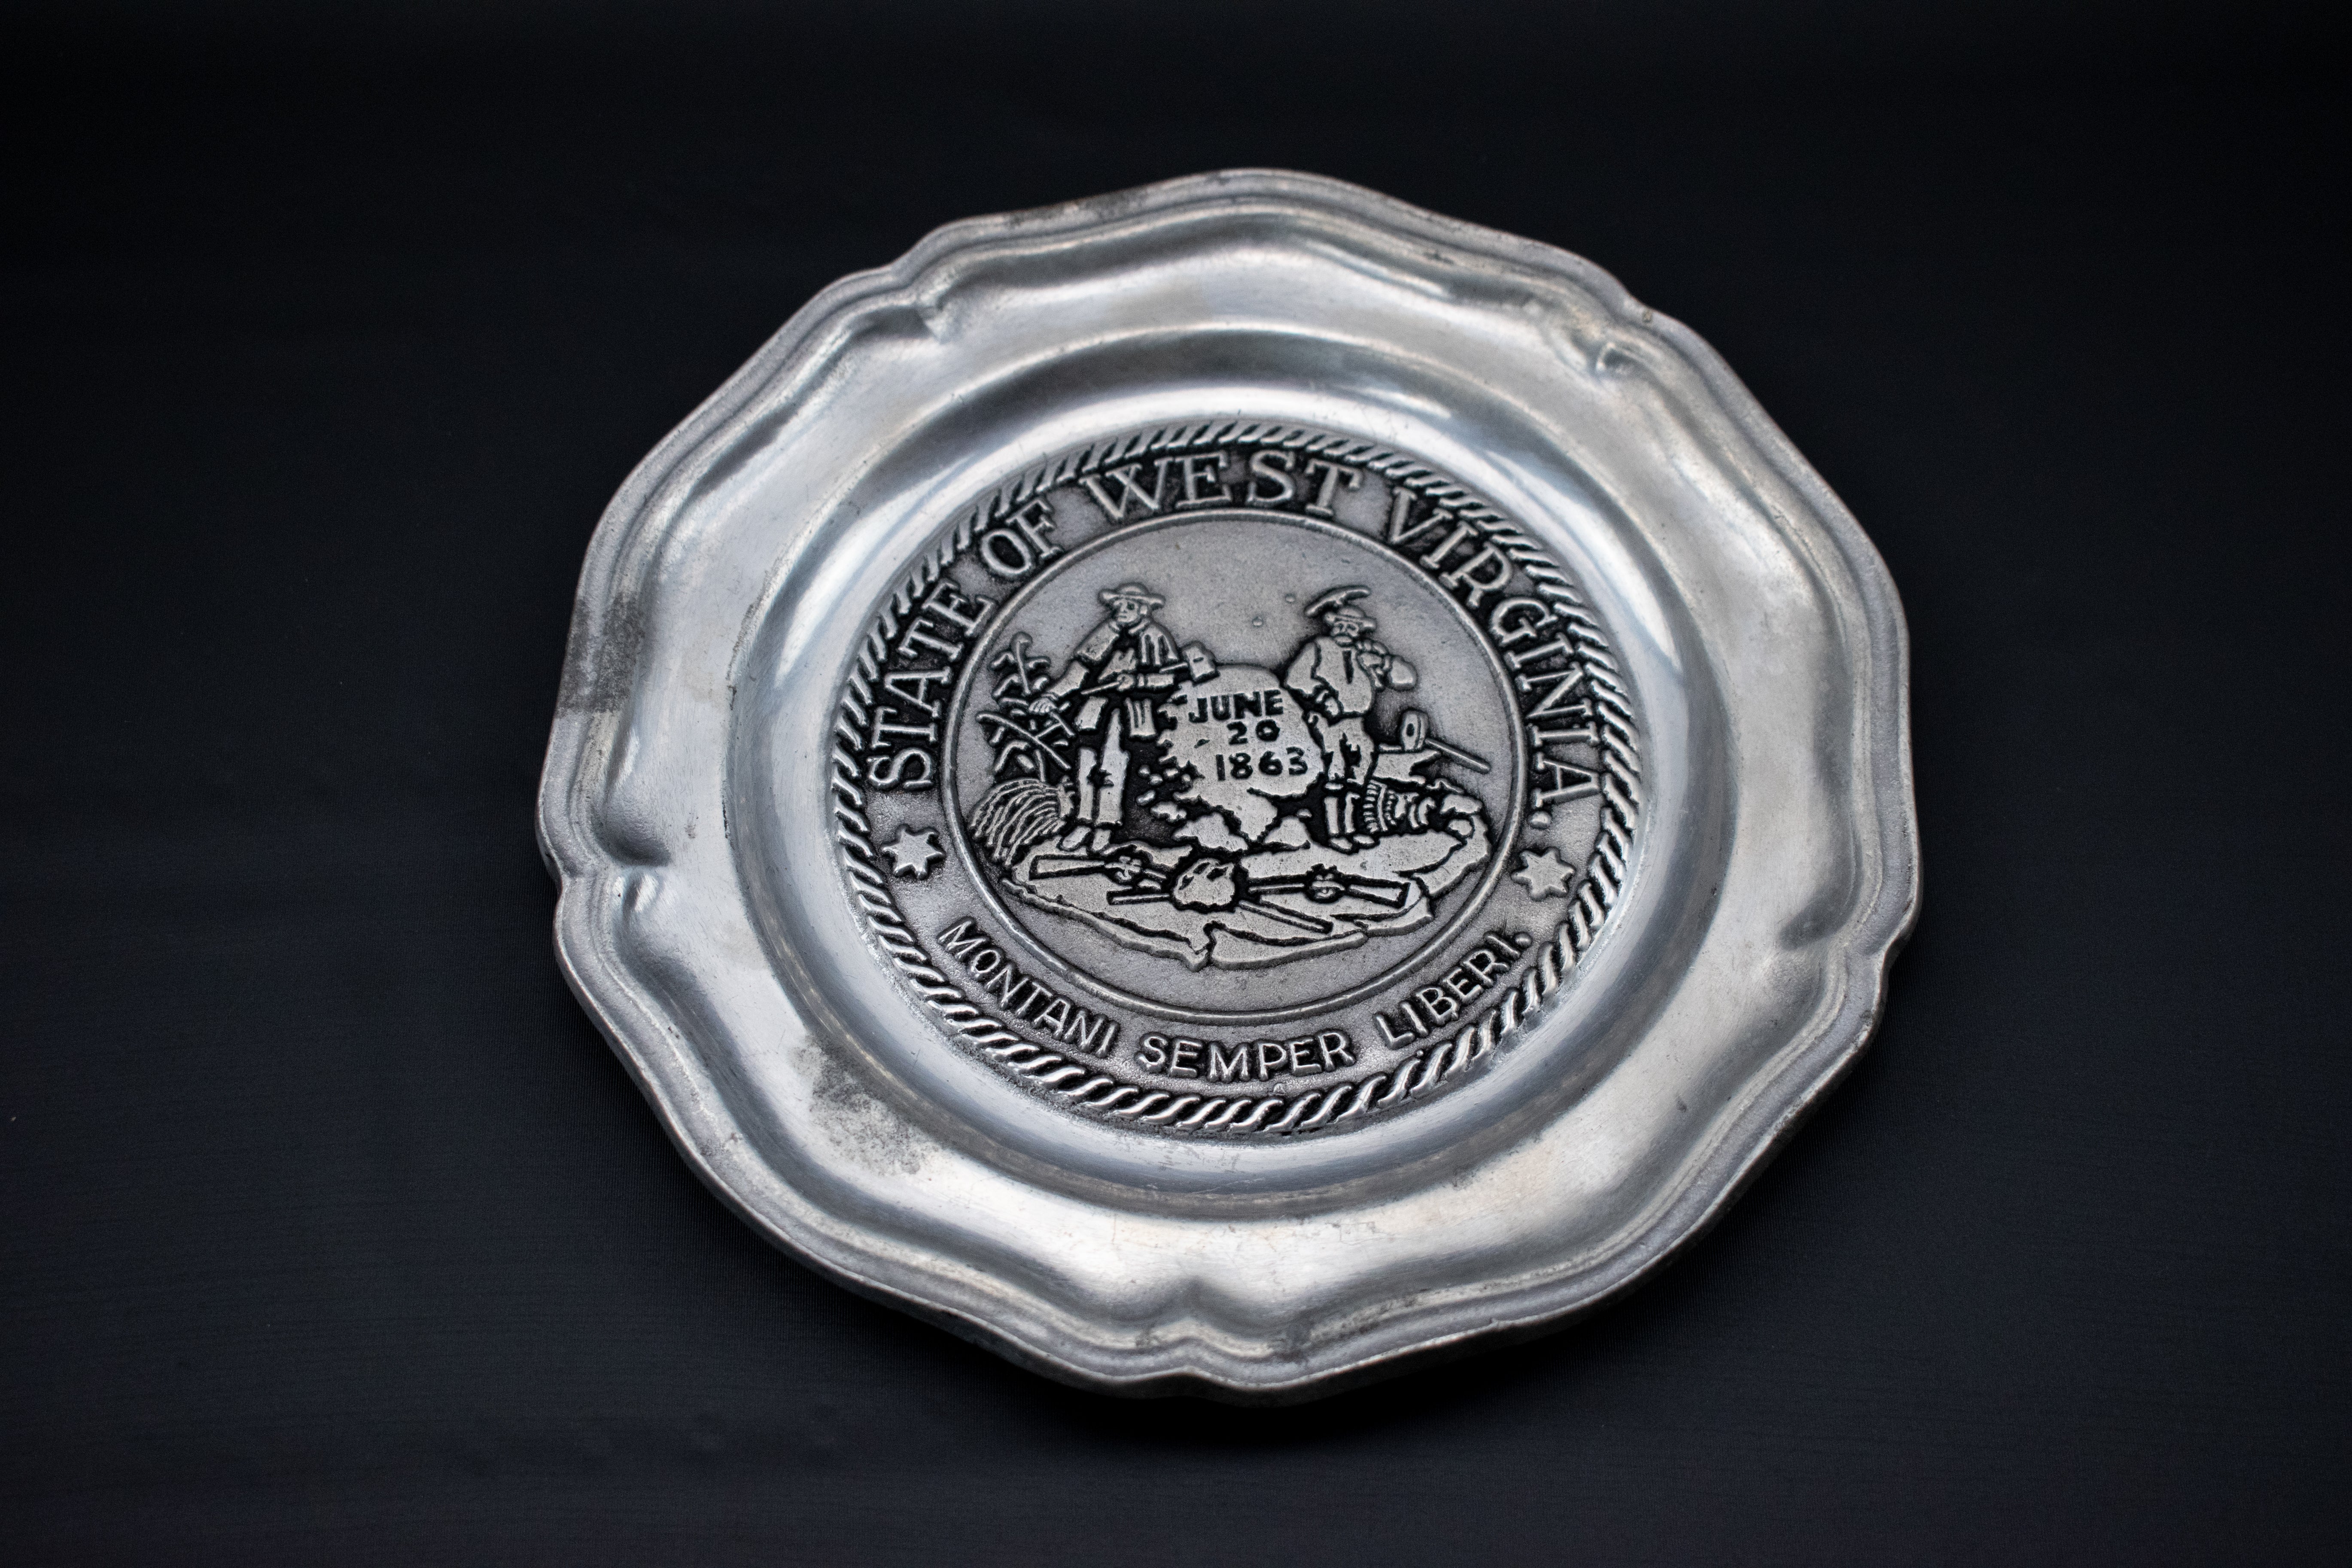 American History Silver Plate  RWP West Virginia 1863 June 20 Montani Semper